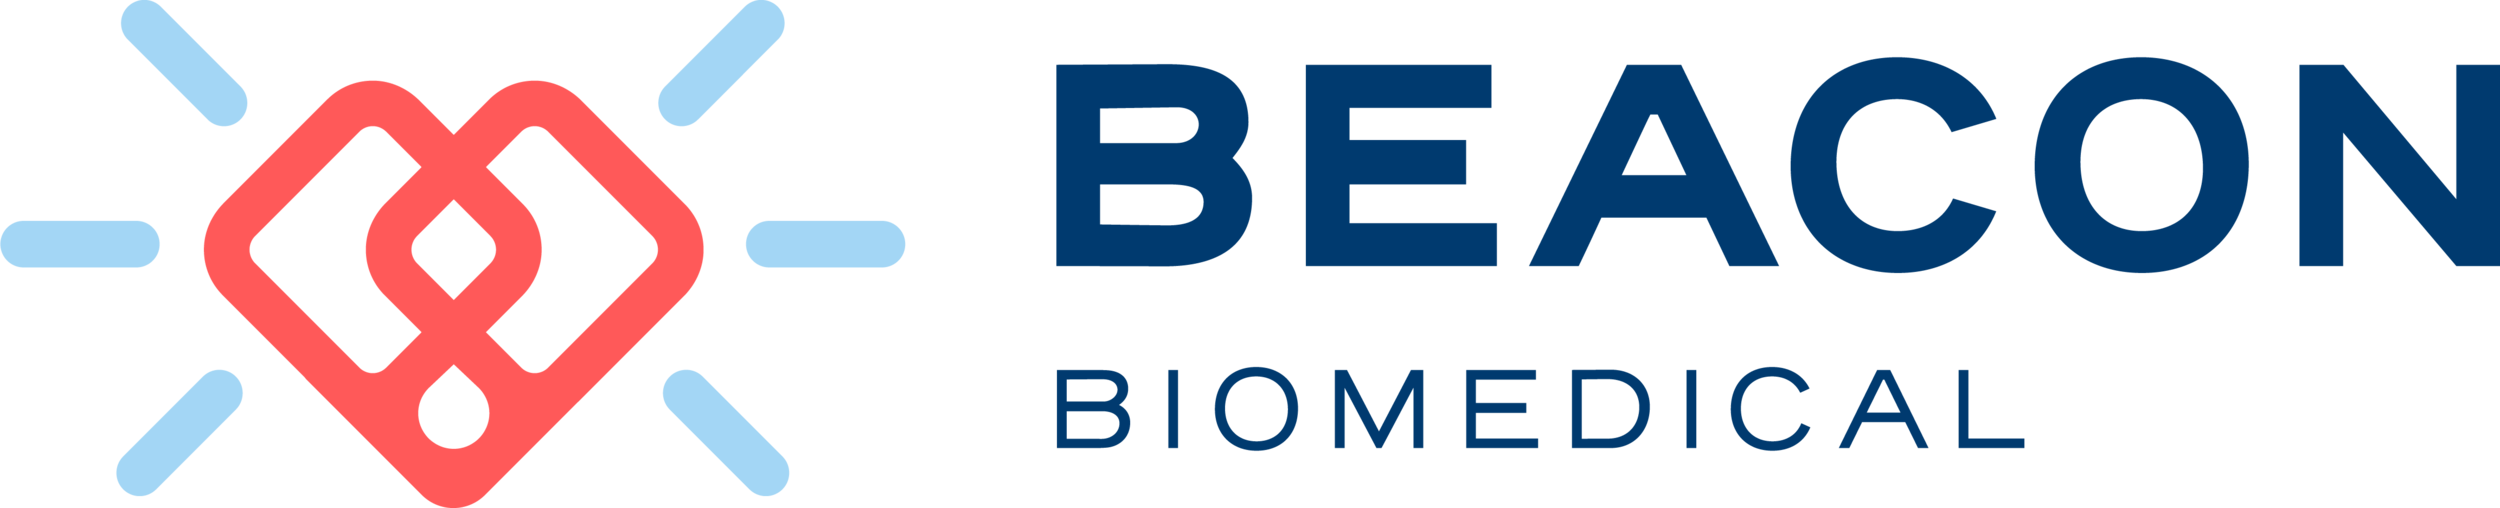 Beacon Biomedical